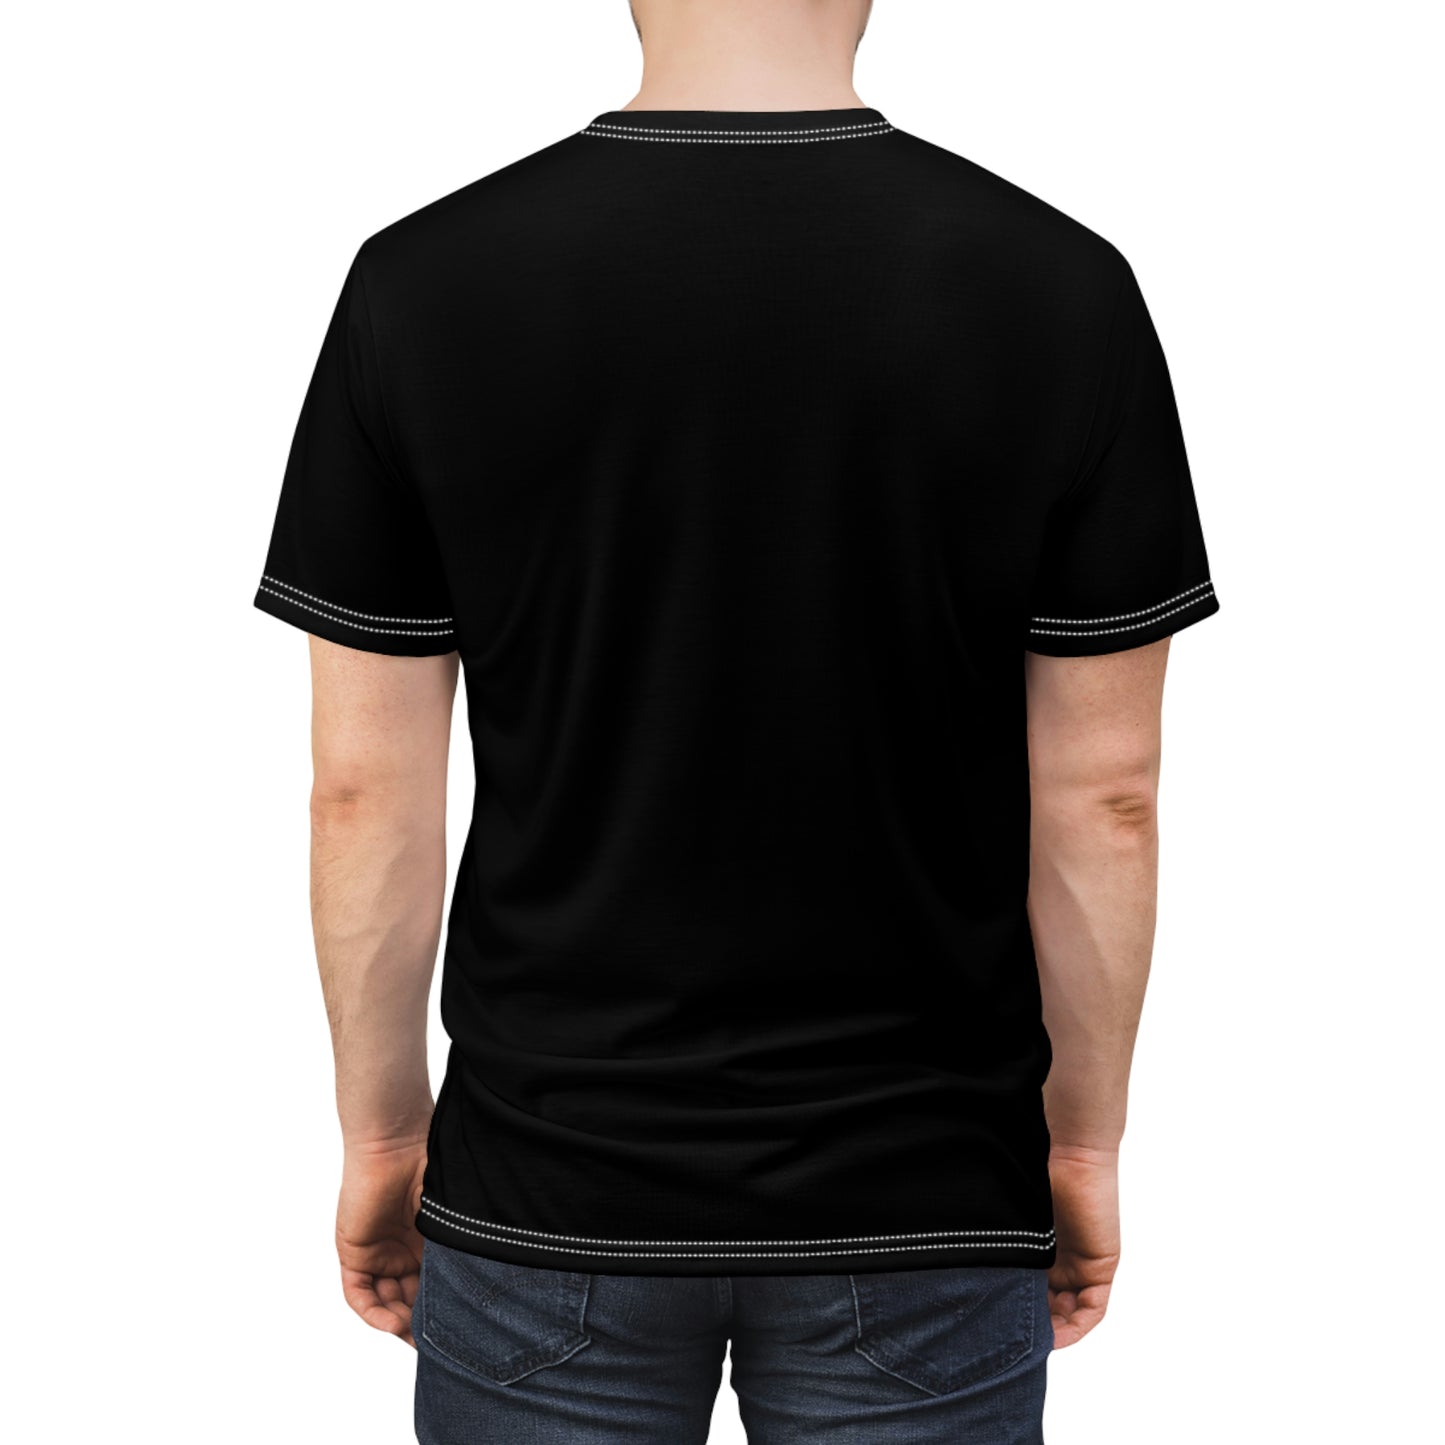 The Merchant Prince - Unisex All-Over Print Cut & Sew T-Shirt